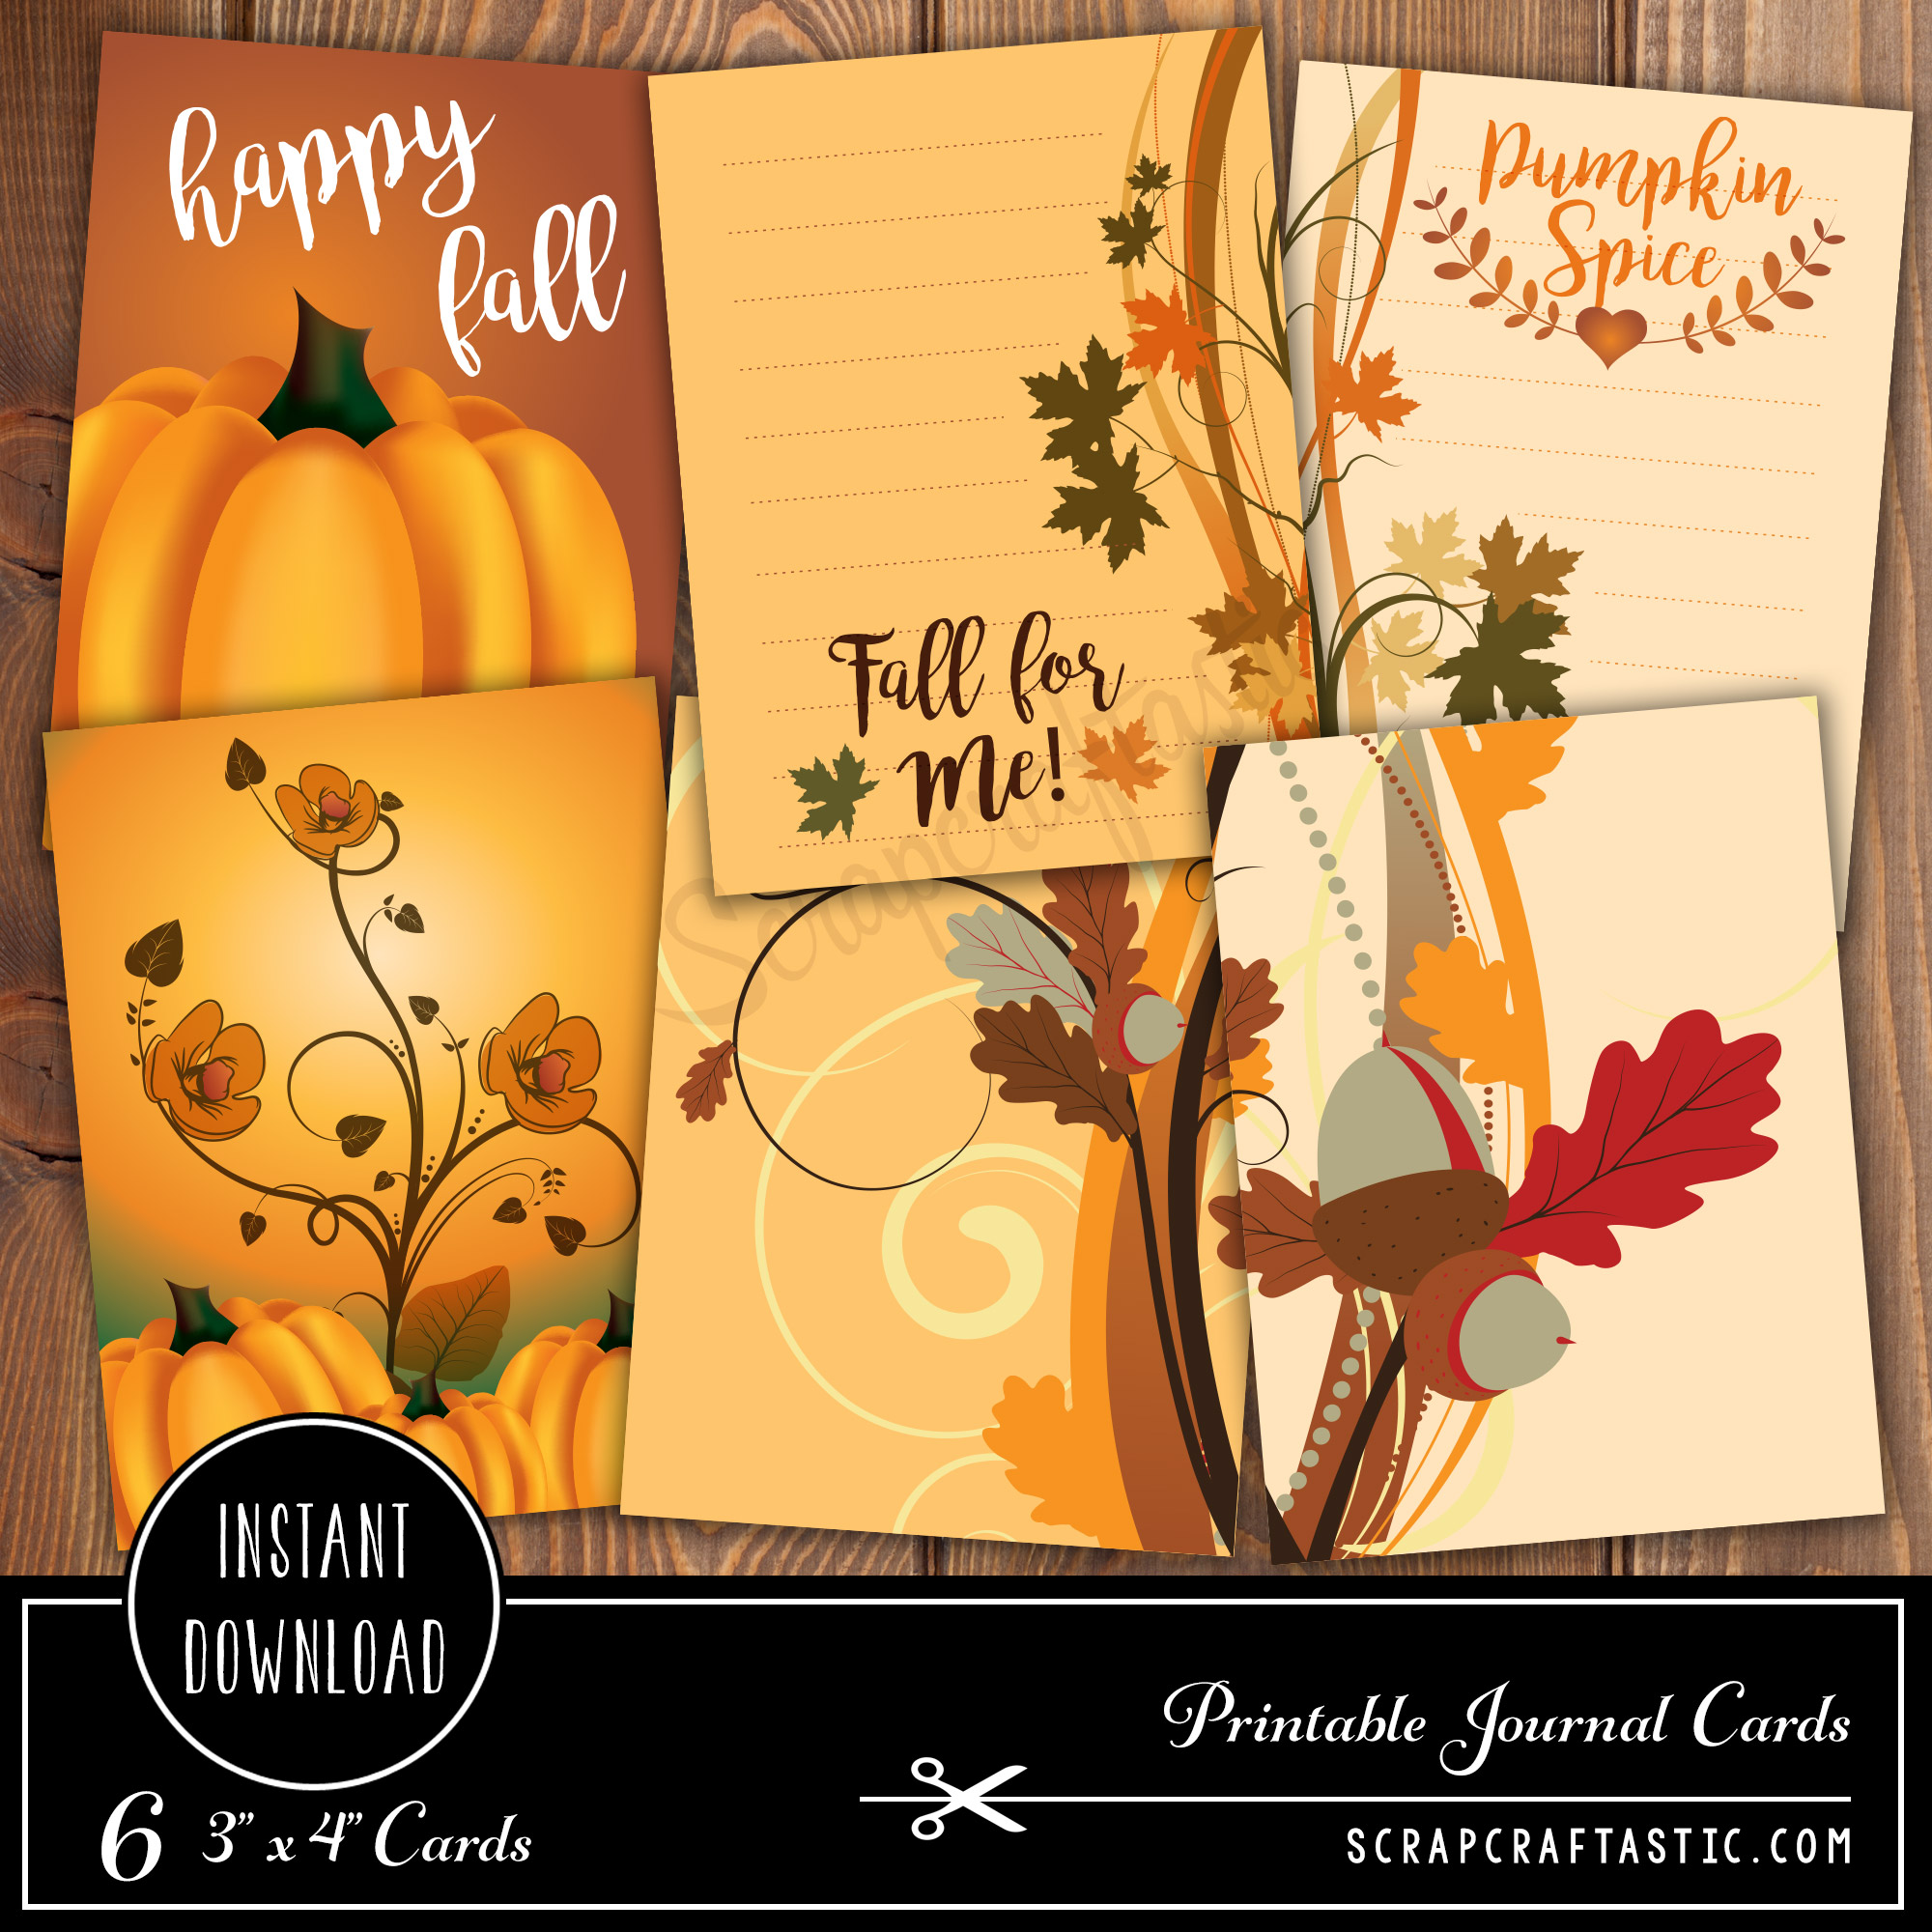 Pumpkin Spice 3x4 Journal Card Digital Collage Print Sheet